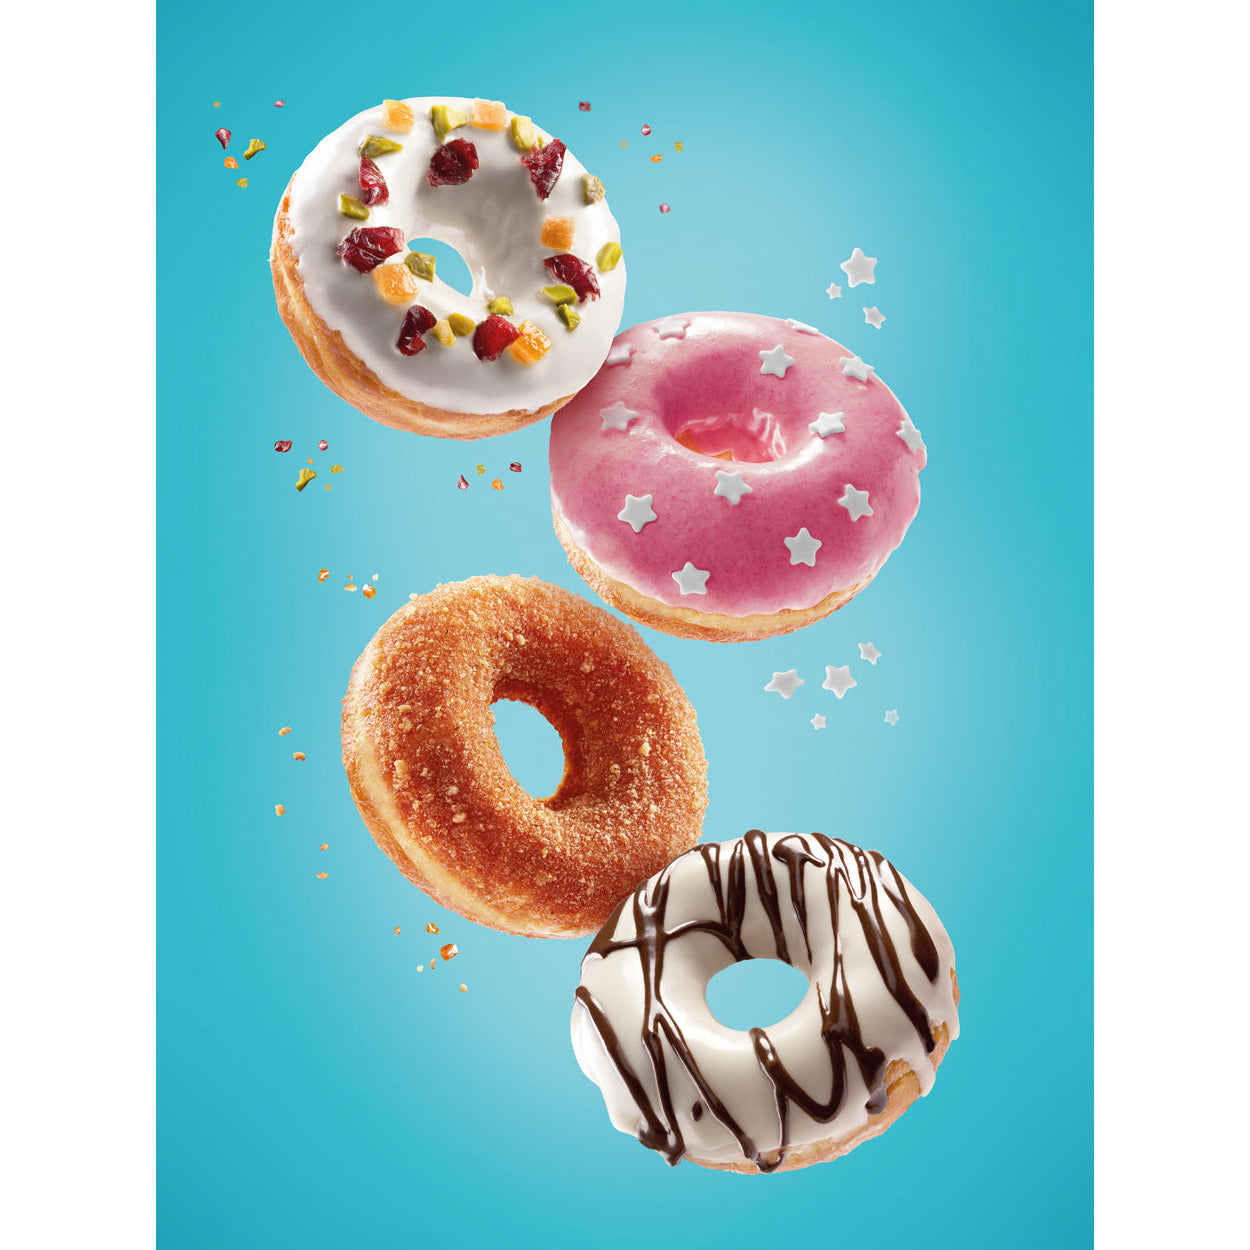 Magnetisches Markerboard - Donuts